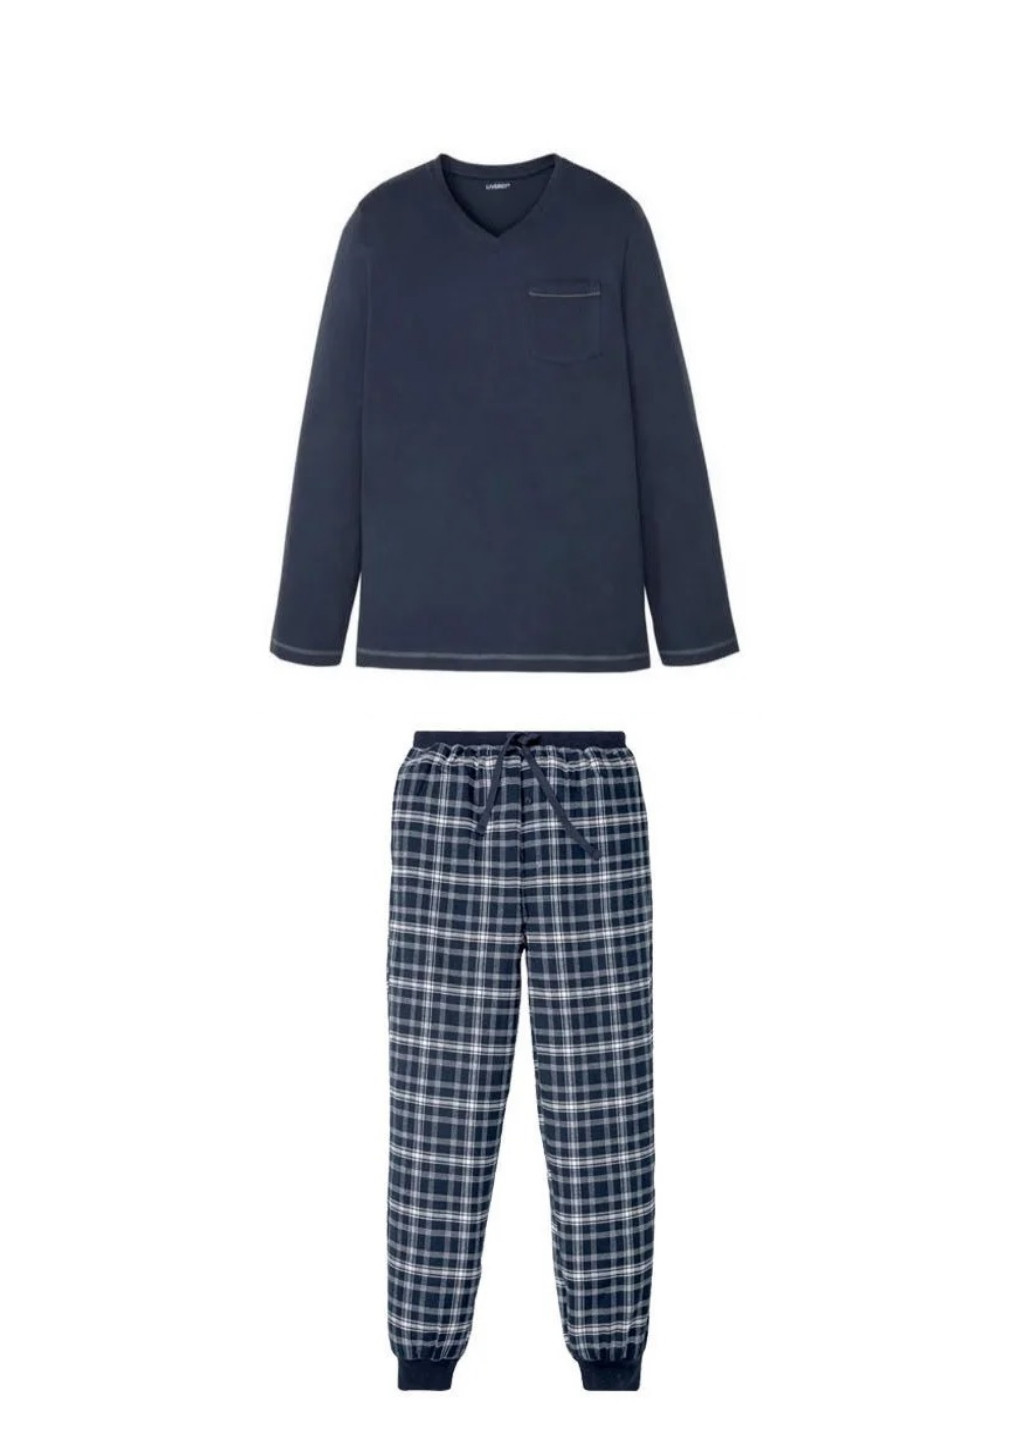 Пижама (лонгслив, брюки) Livergy лонгслив + брюки клетка тёмно-синяя домашняя трикотаж, хлопок, байка